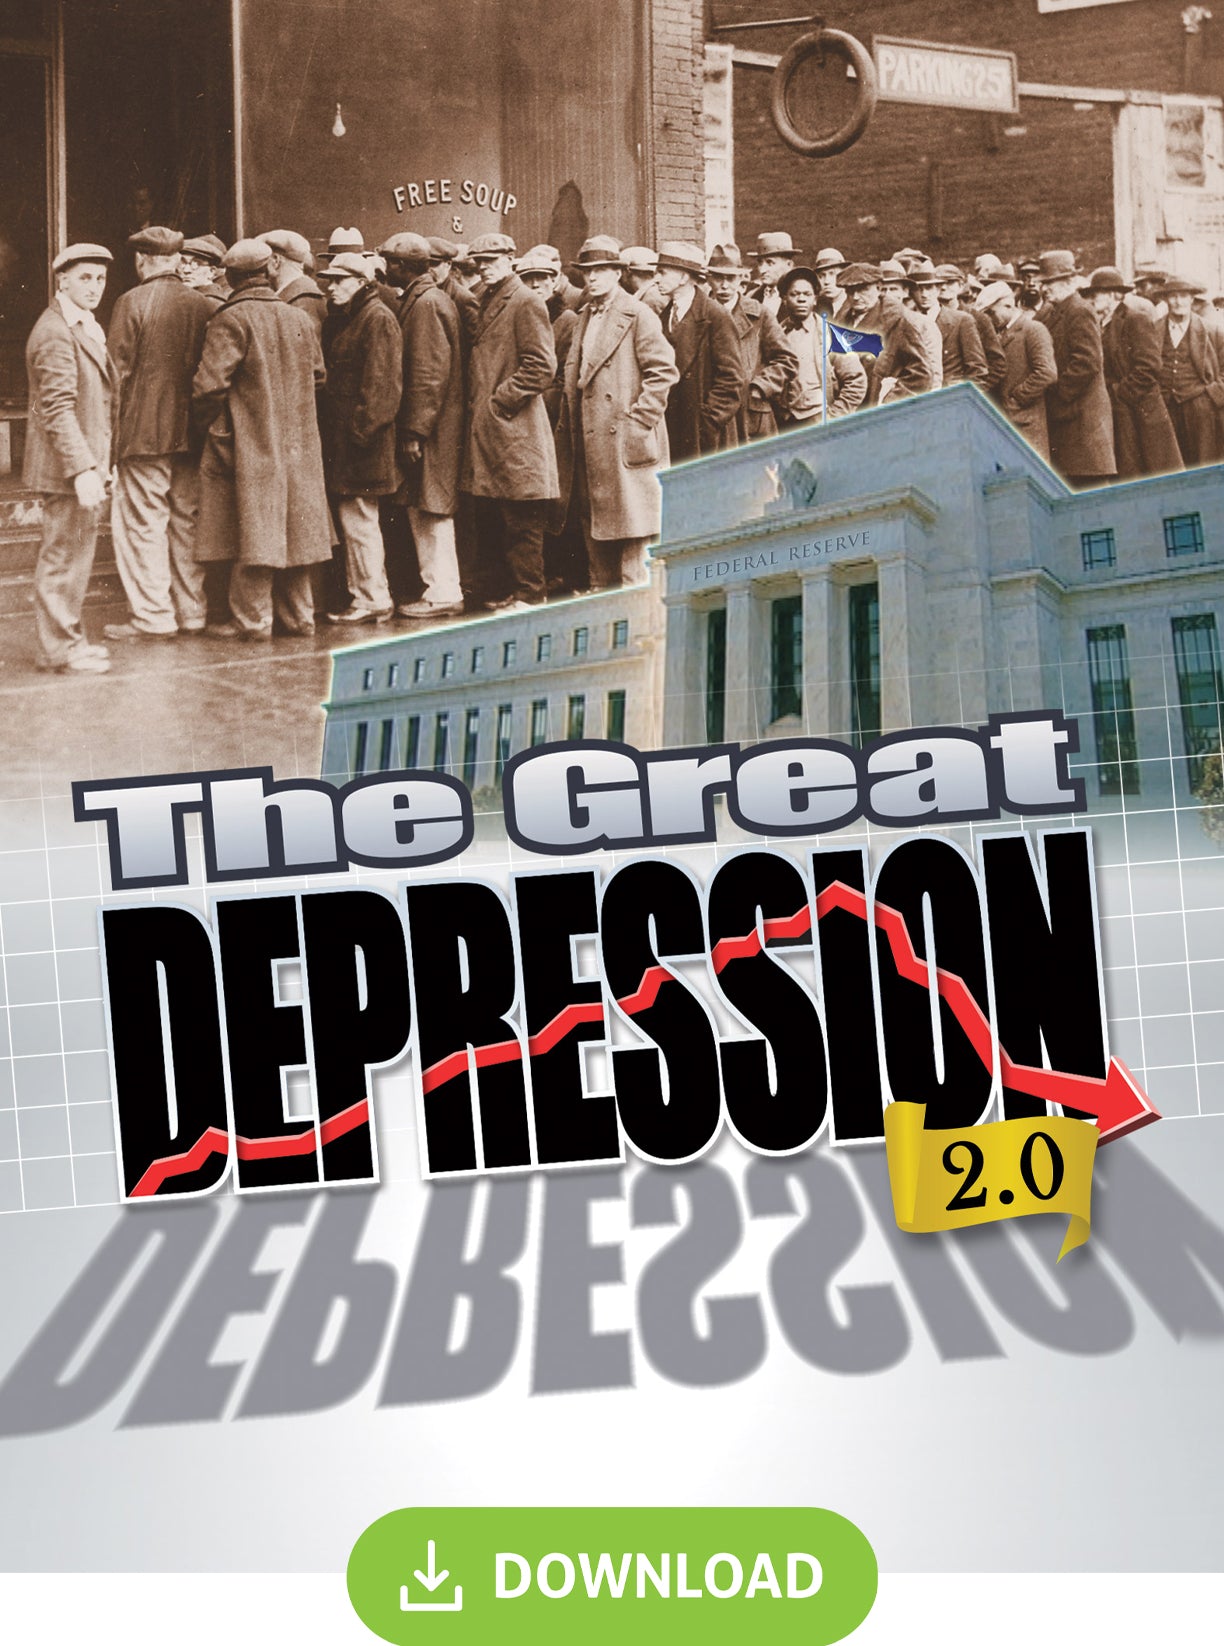 The Great Depression 2.0 - Digital HD